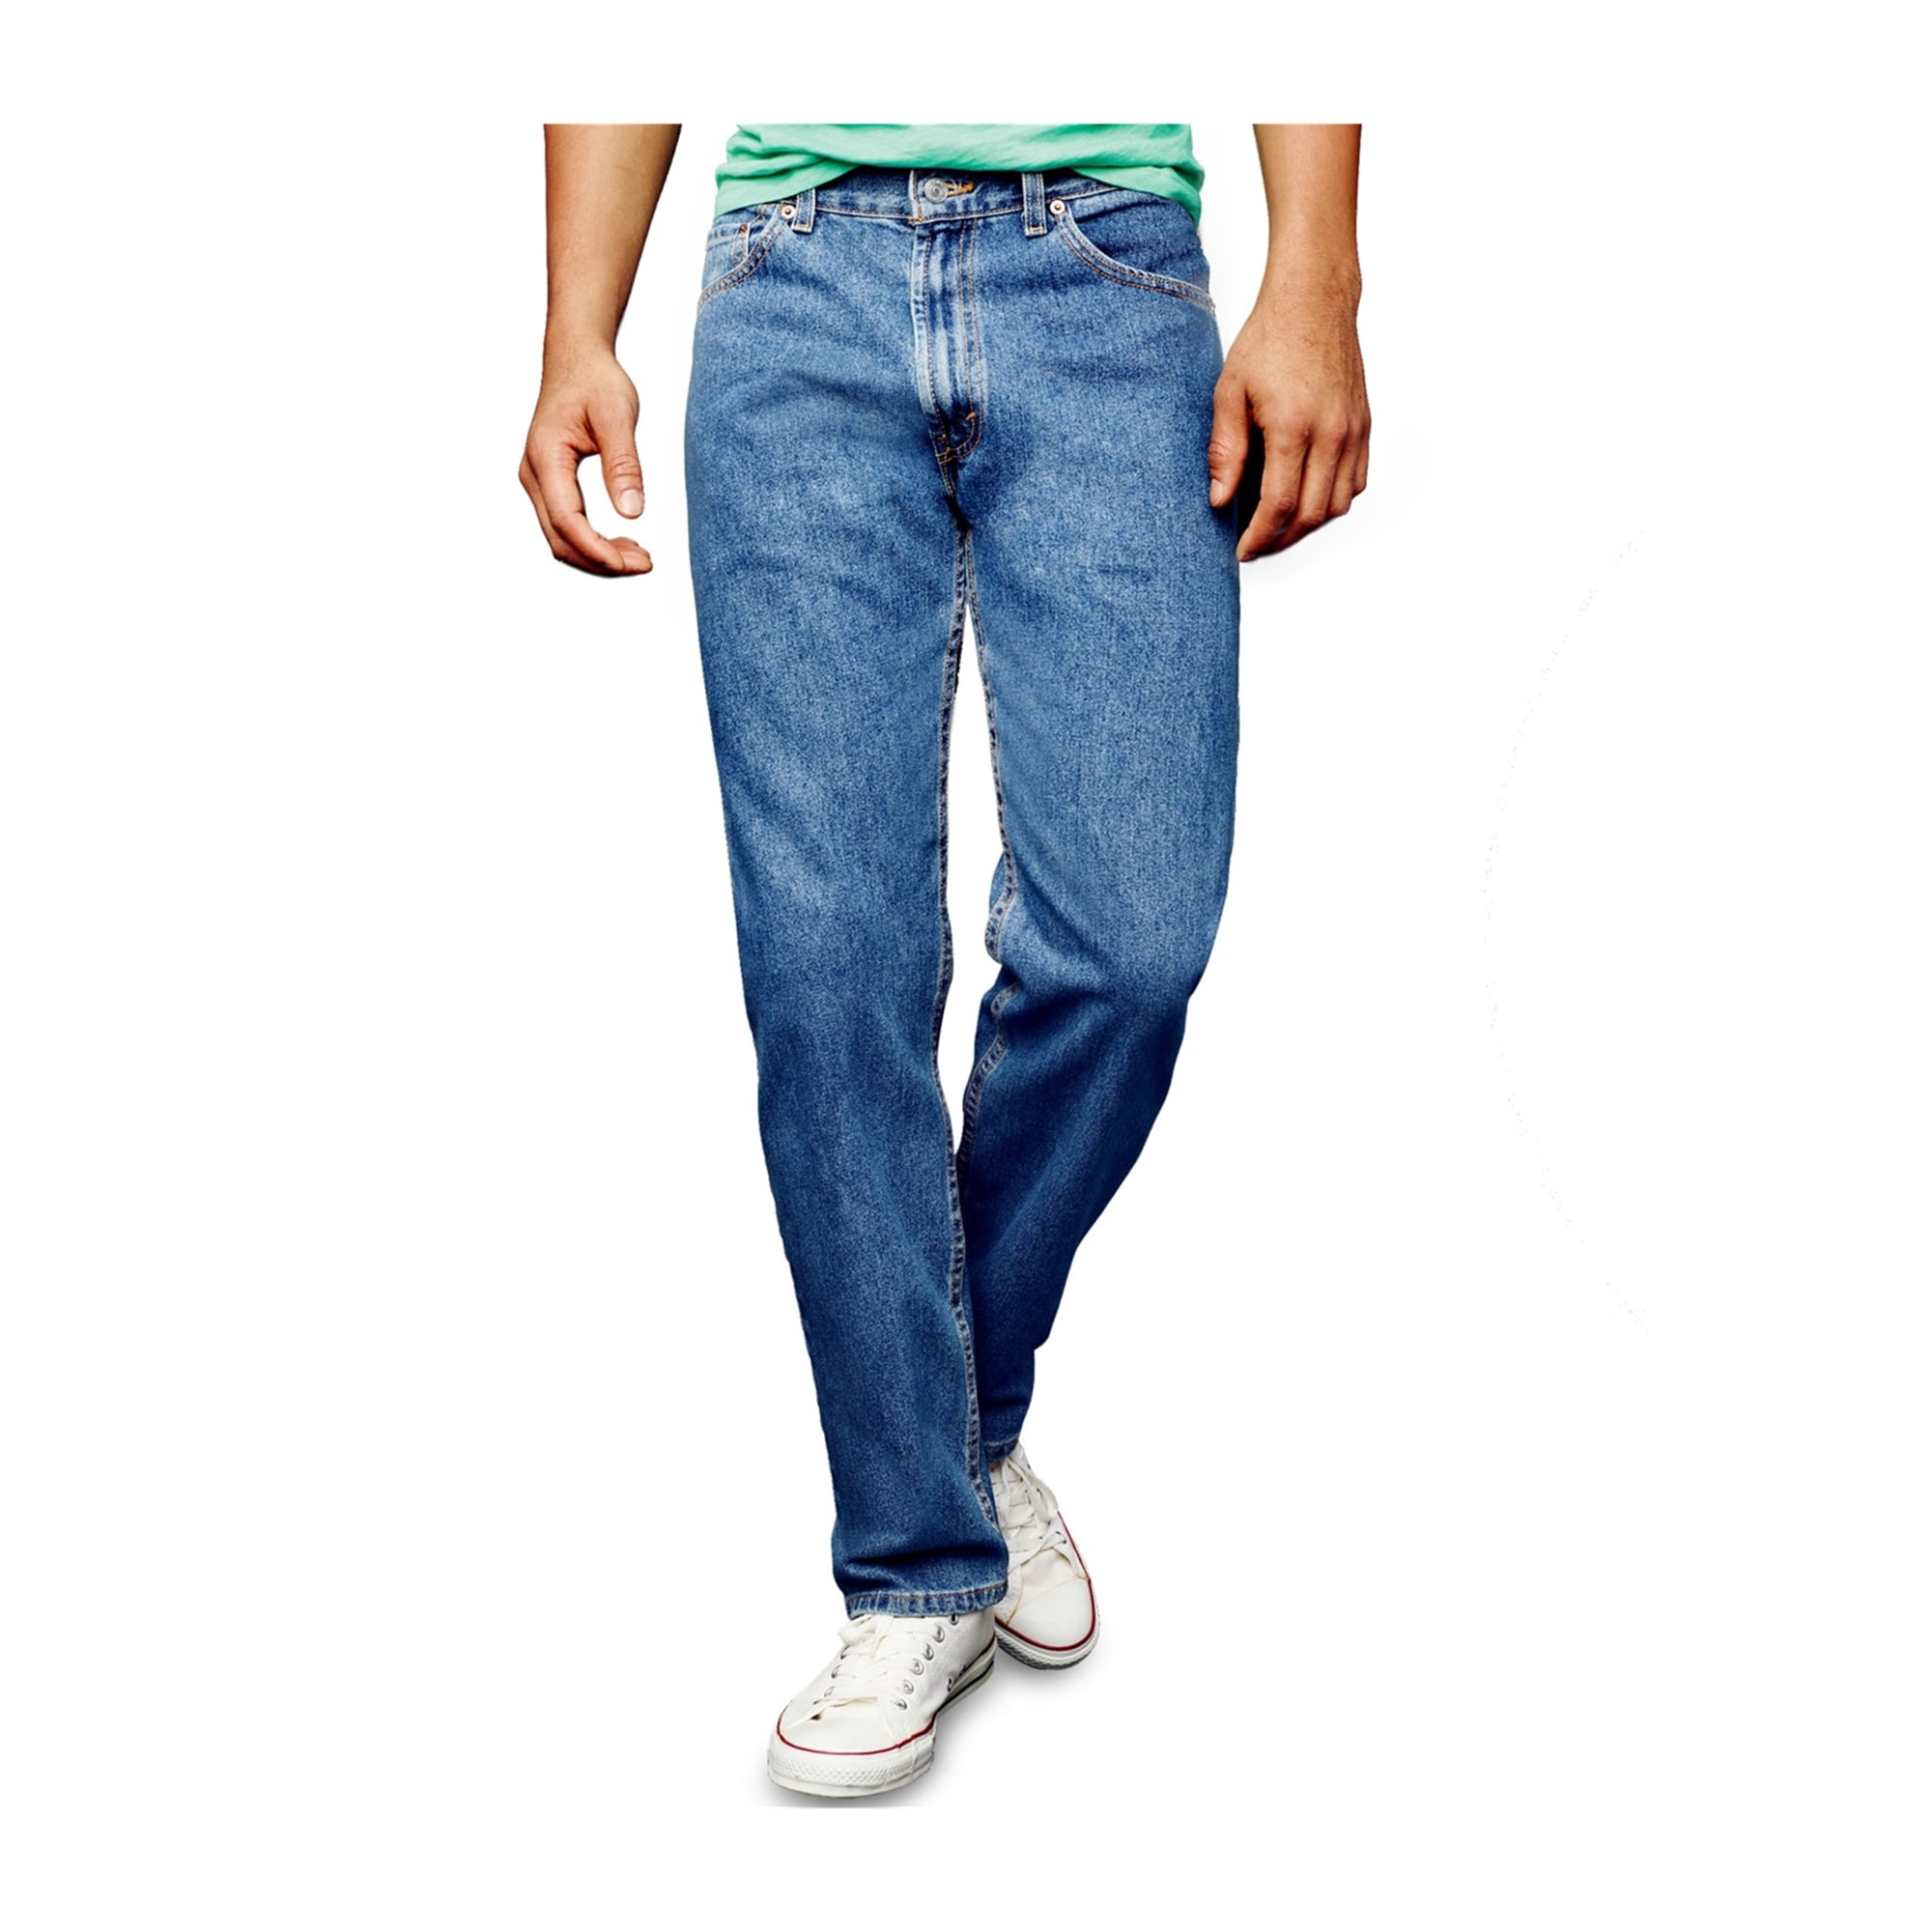 Mens 505 Jeans mediumstonewash 31x30 | Walmart Canada